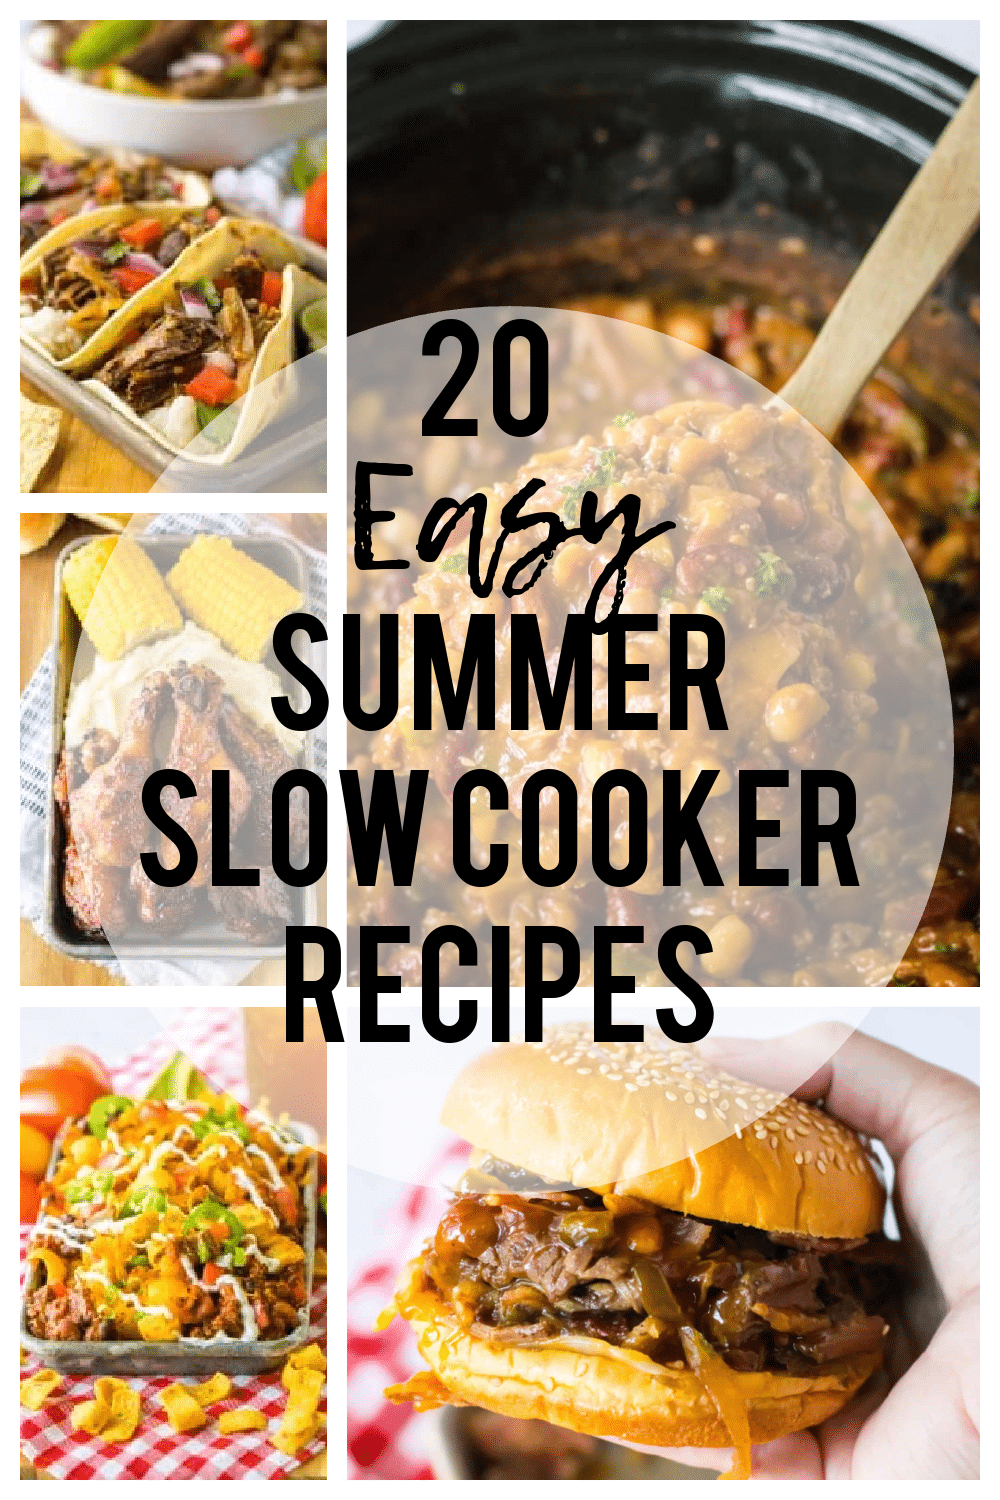 Slow Cooker Summer Recipes